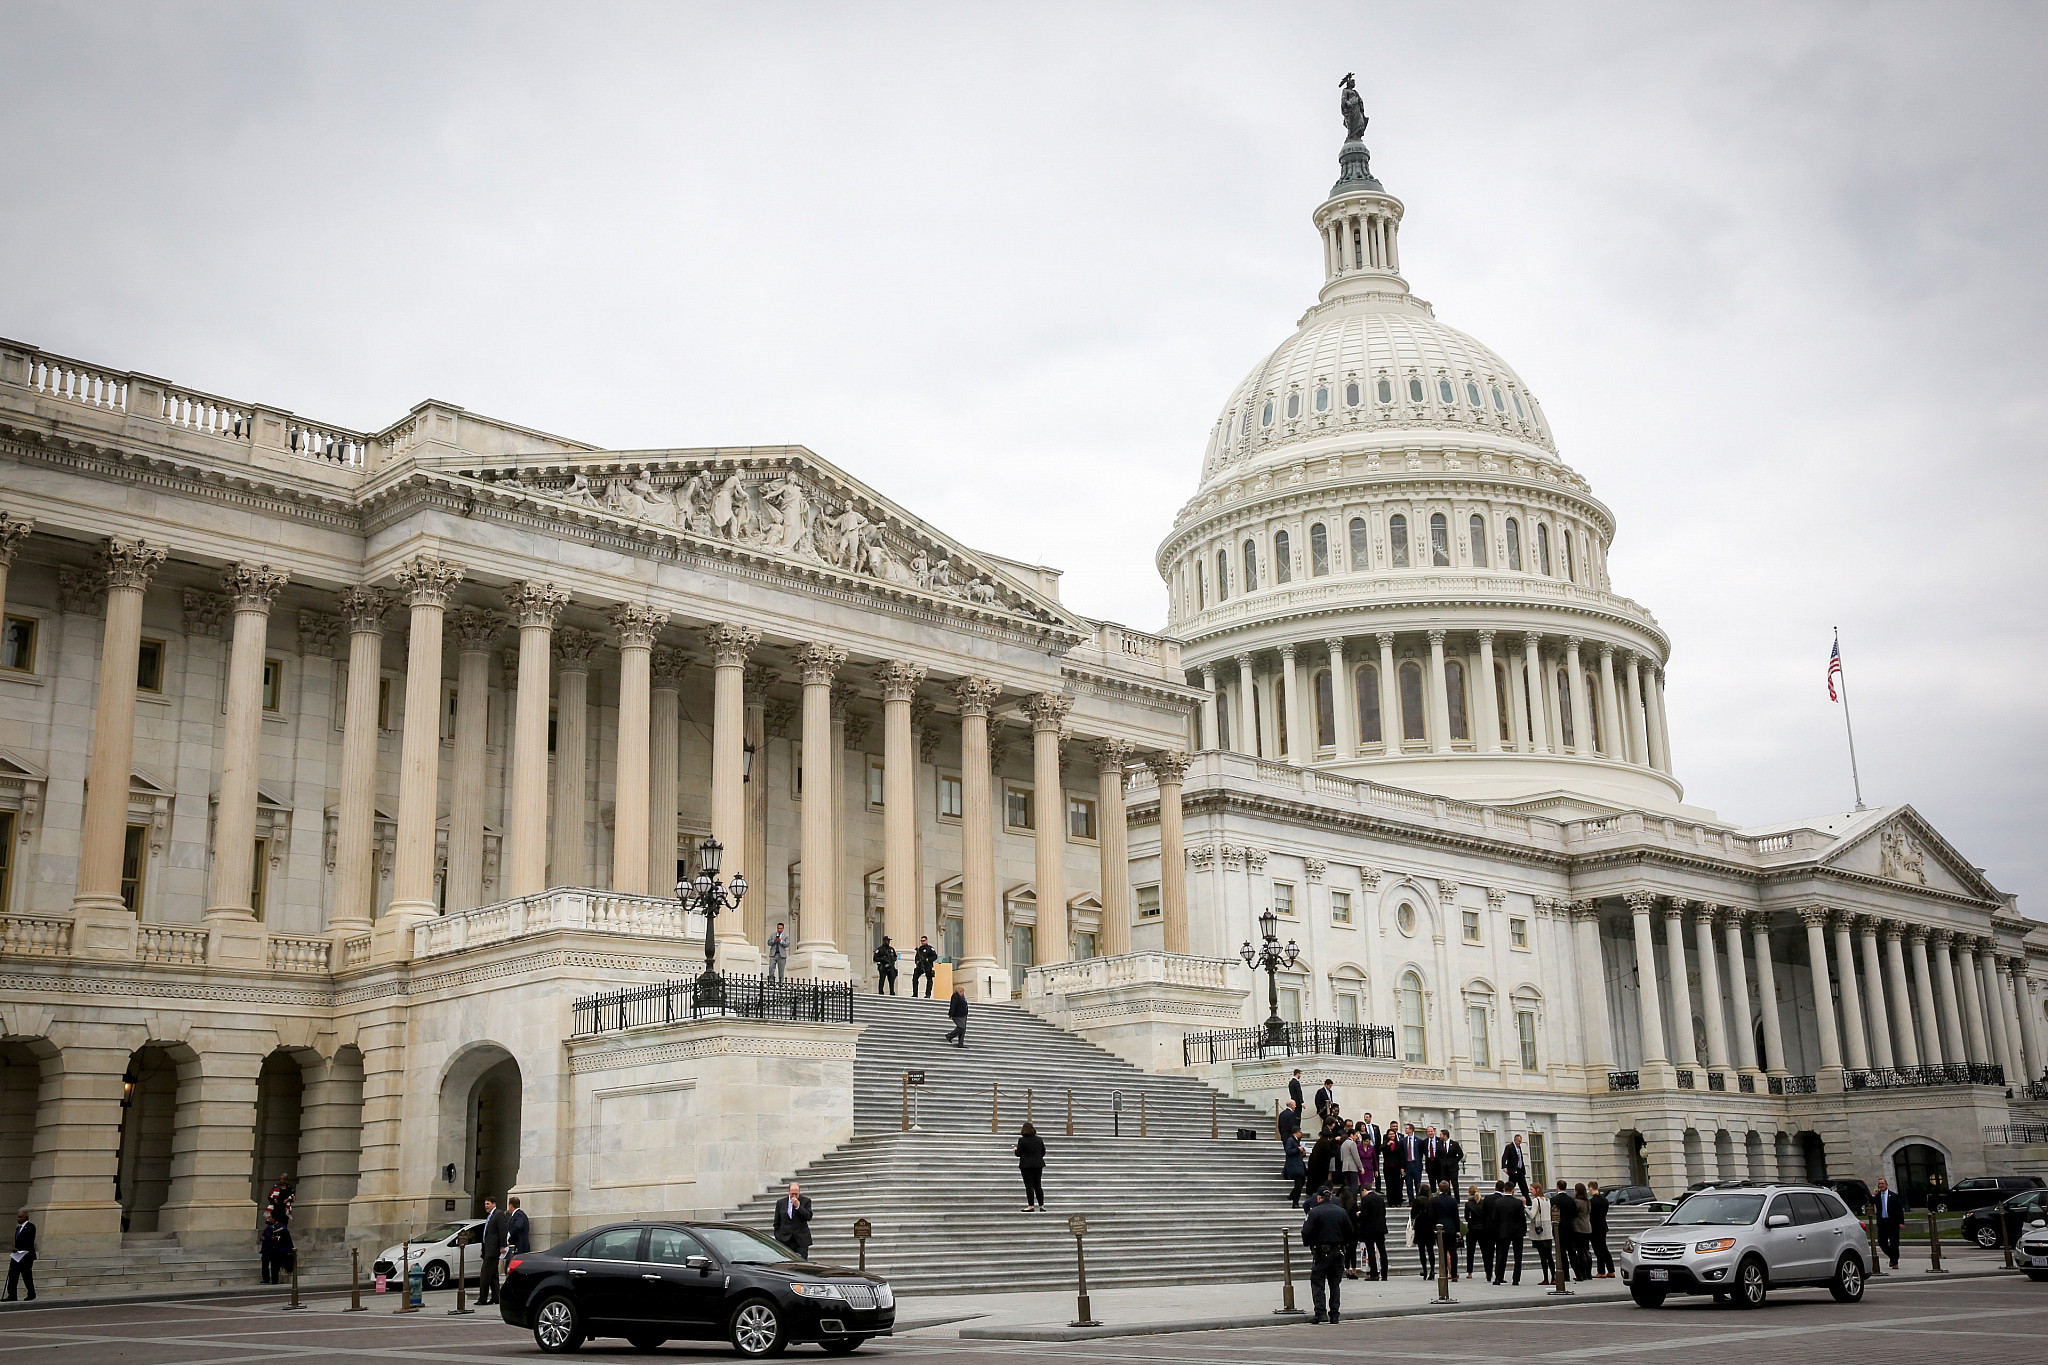 View of the Capitol, Washington DC, where U.S. Congress resides. November 11, 2017. (Yossi Zamir/FLASH90)